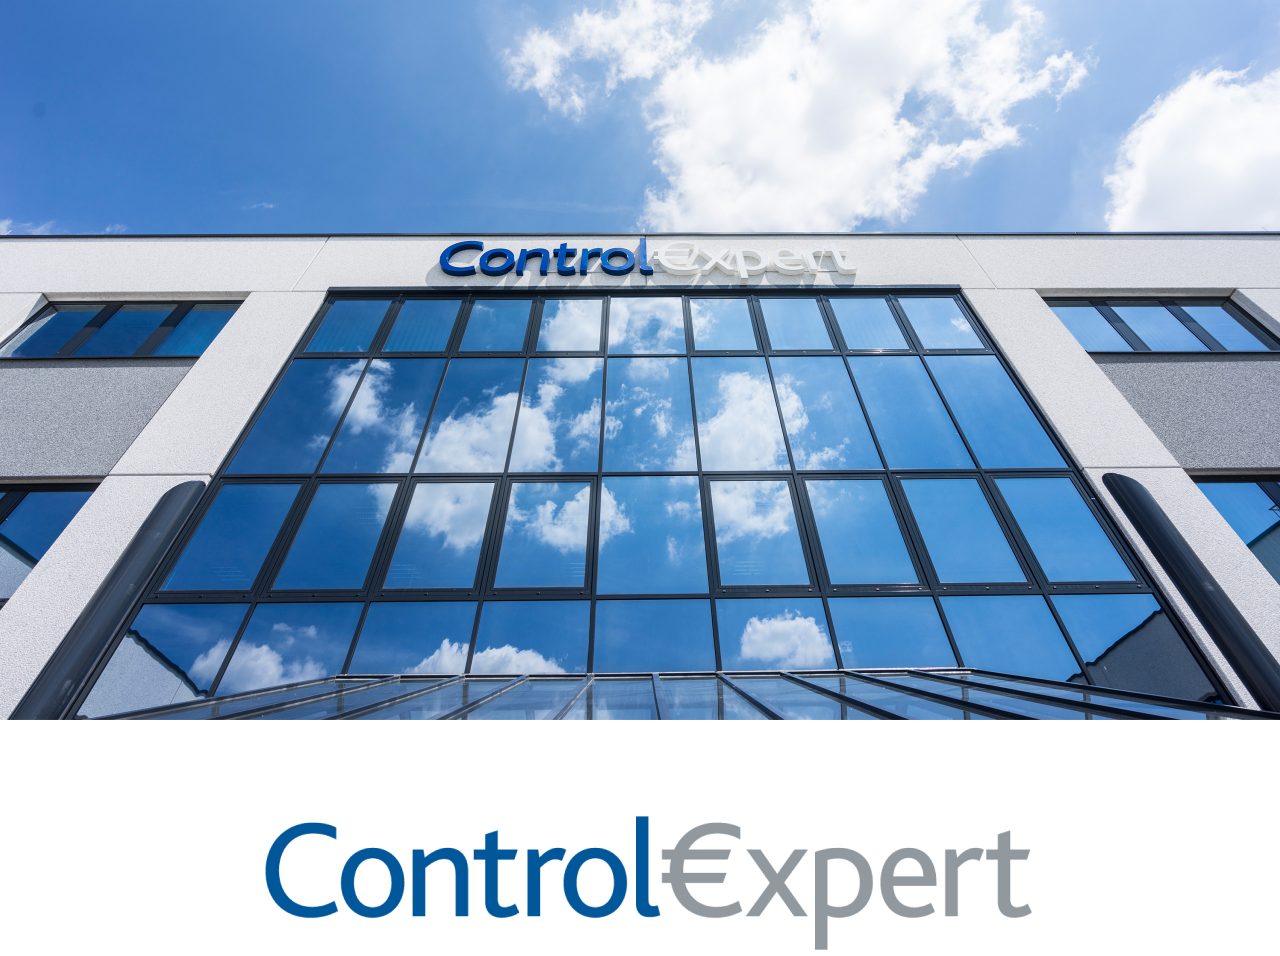 ControlExpert uses NVIDIA AI to enhance customer service